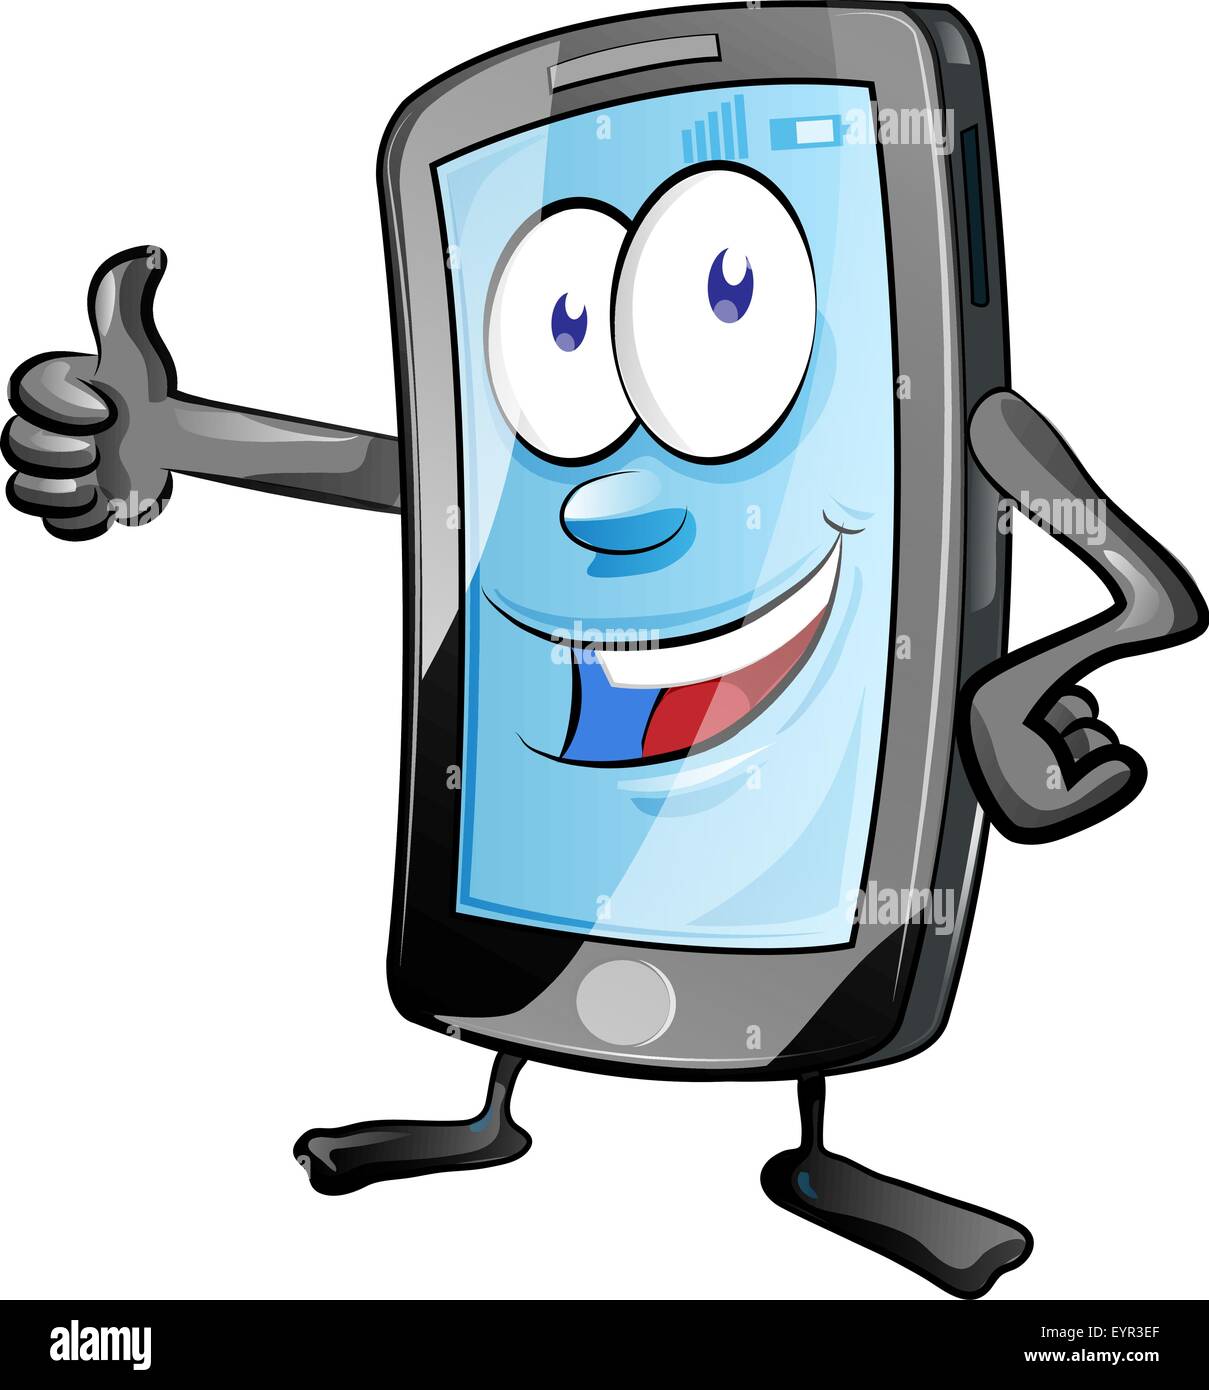 Fun Mobile Phone Cartoon With Thumbs Up Stock Vector Image Art Alamy